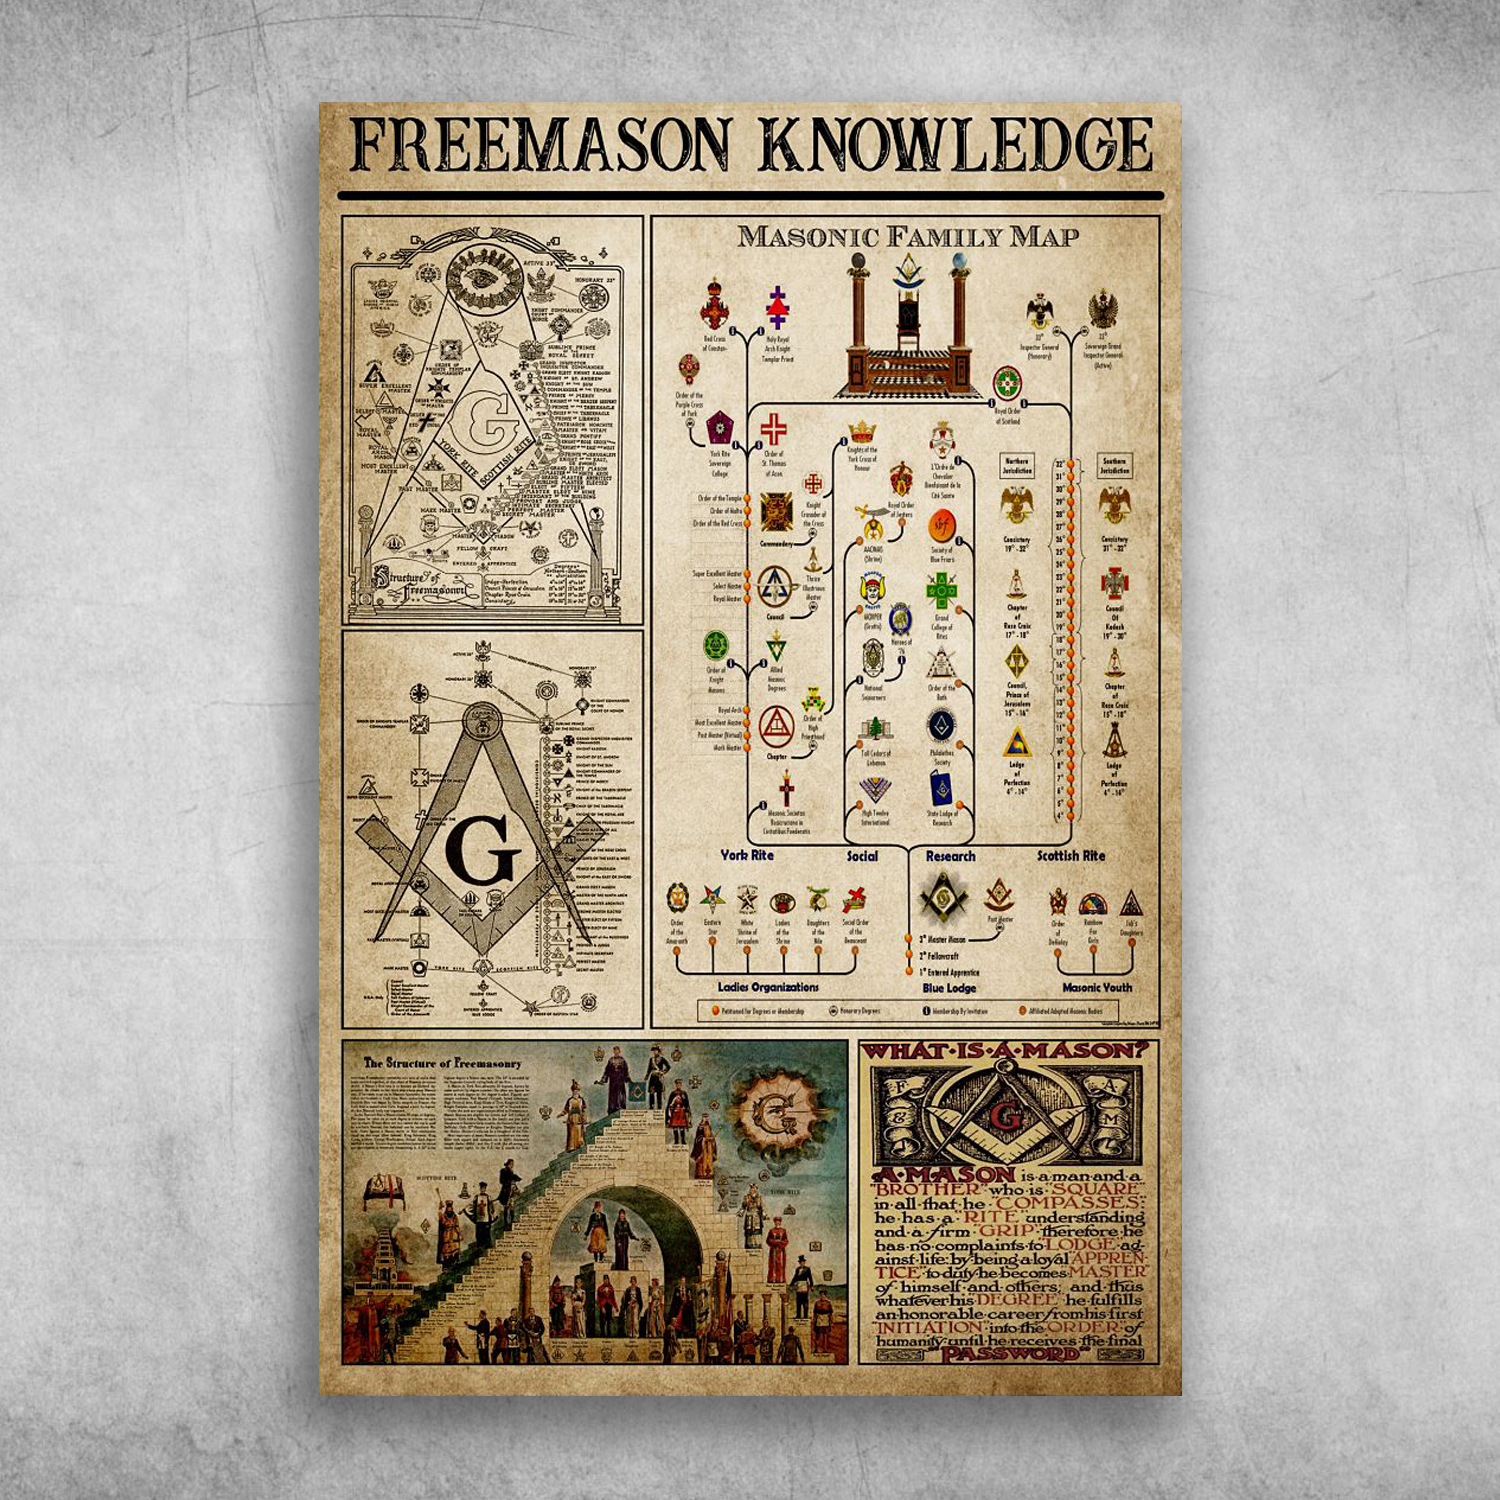 Freemason Knowledge Masonic Family Map